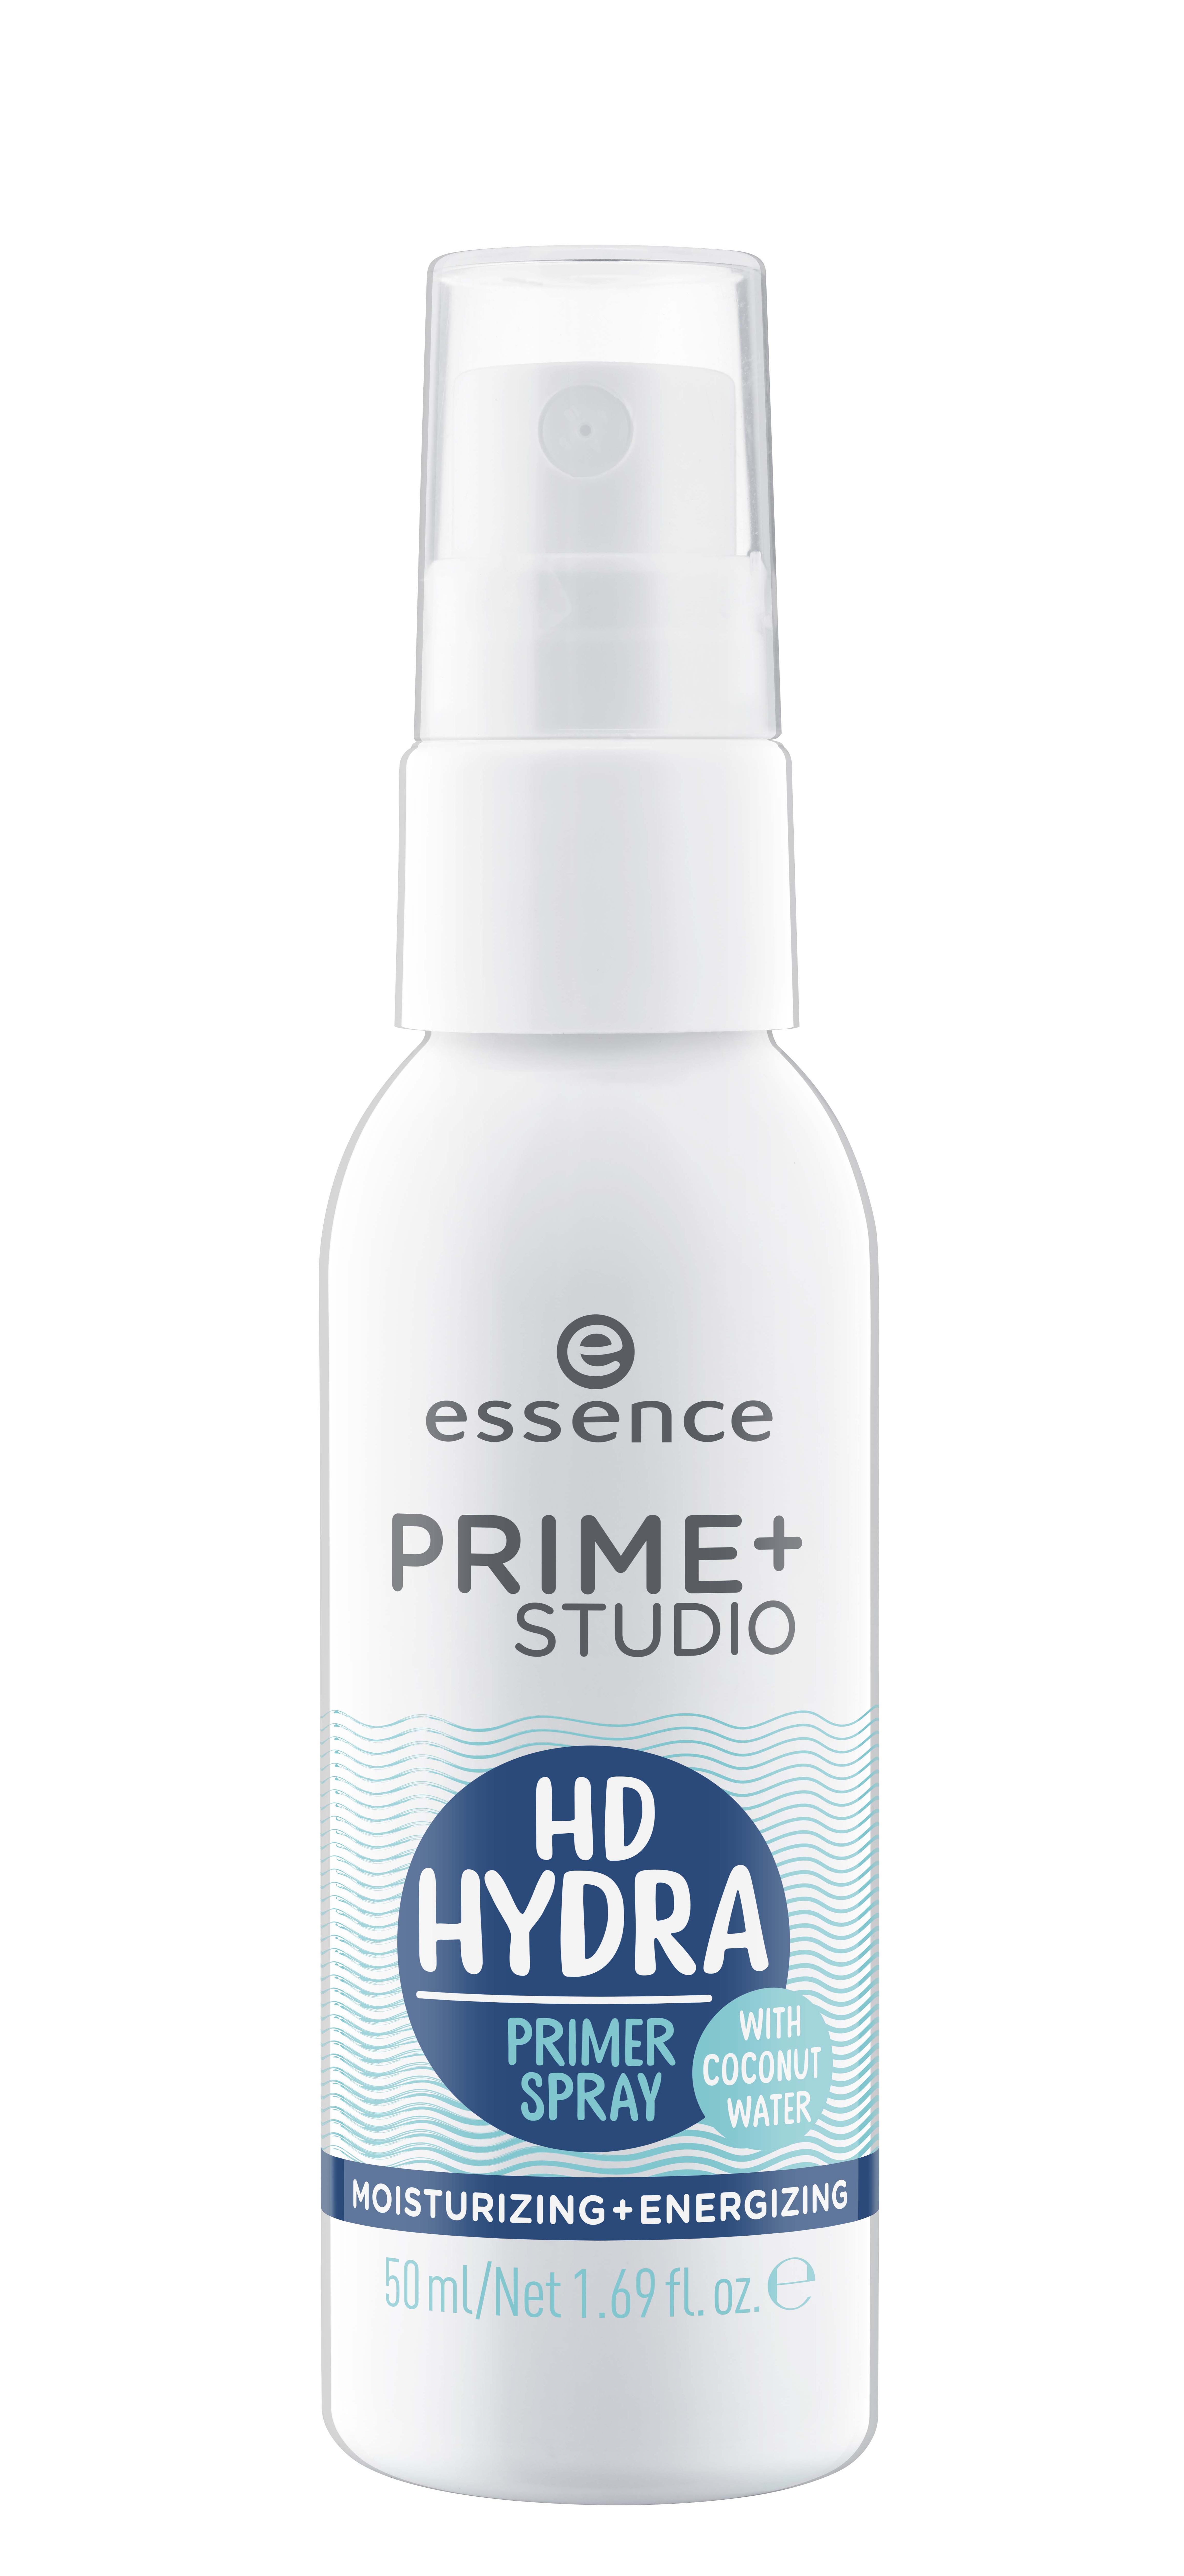 essence prime + studio hd hydra primer spray